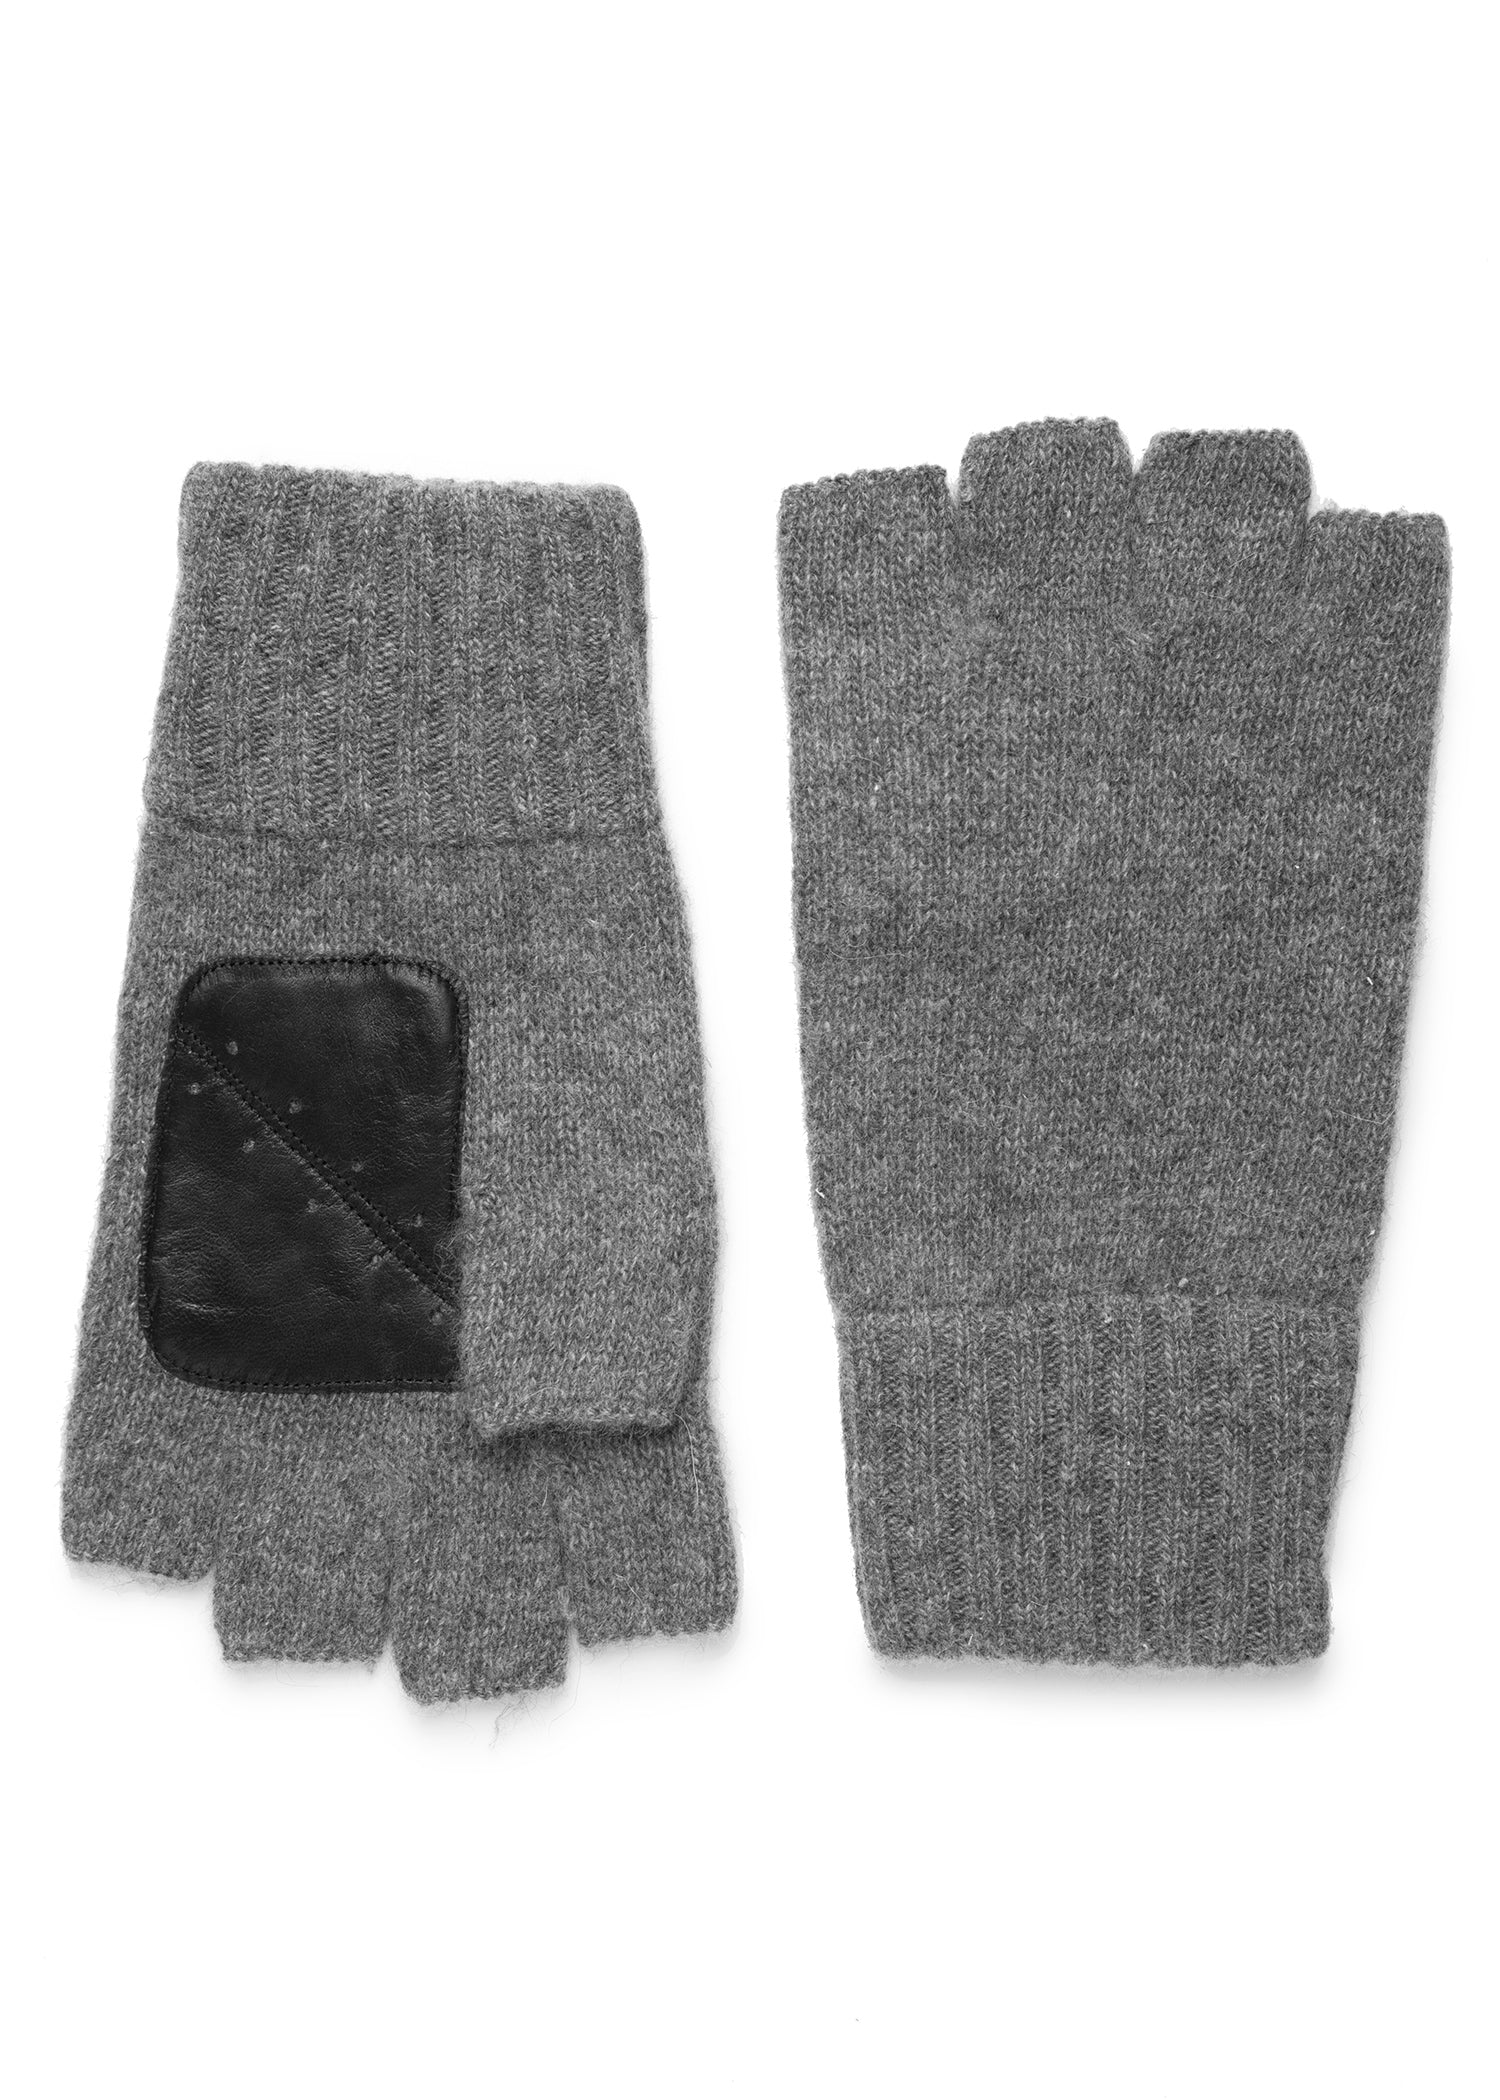 mens gray cashmere knit wrist length fingerless glove